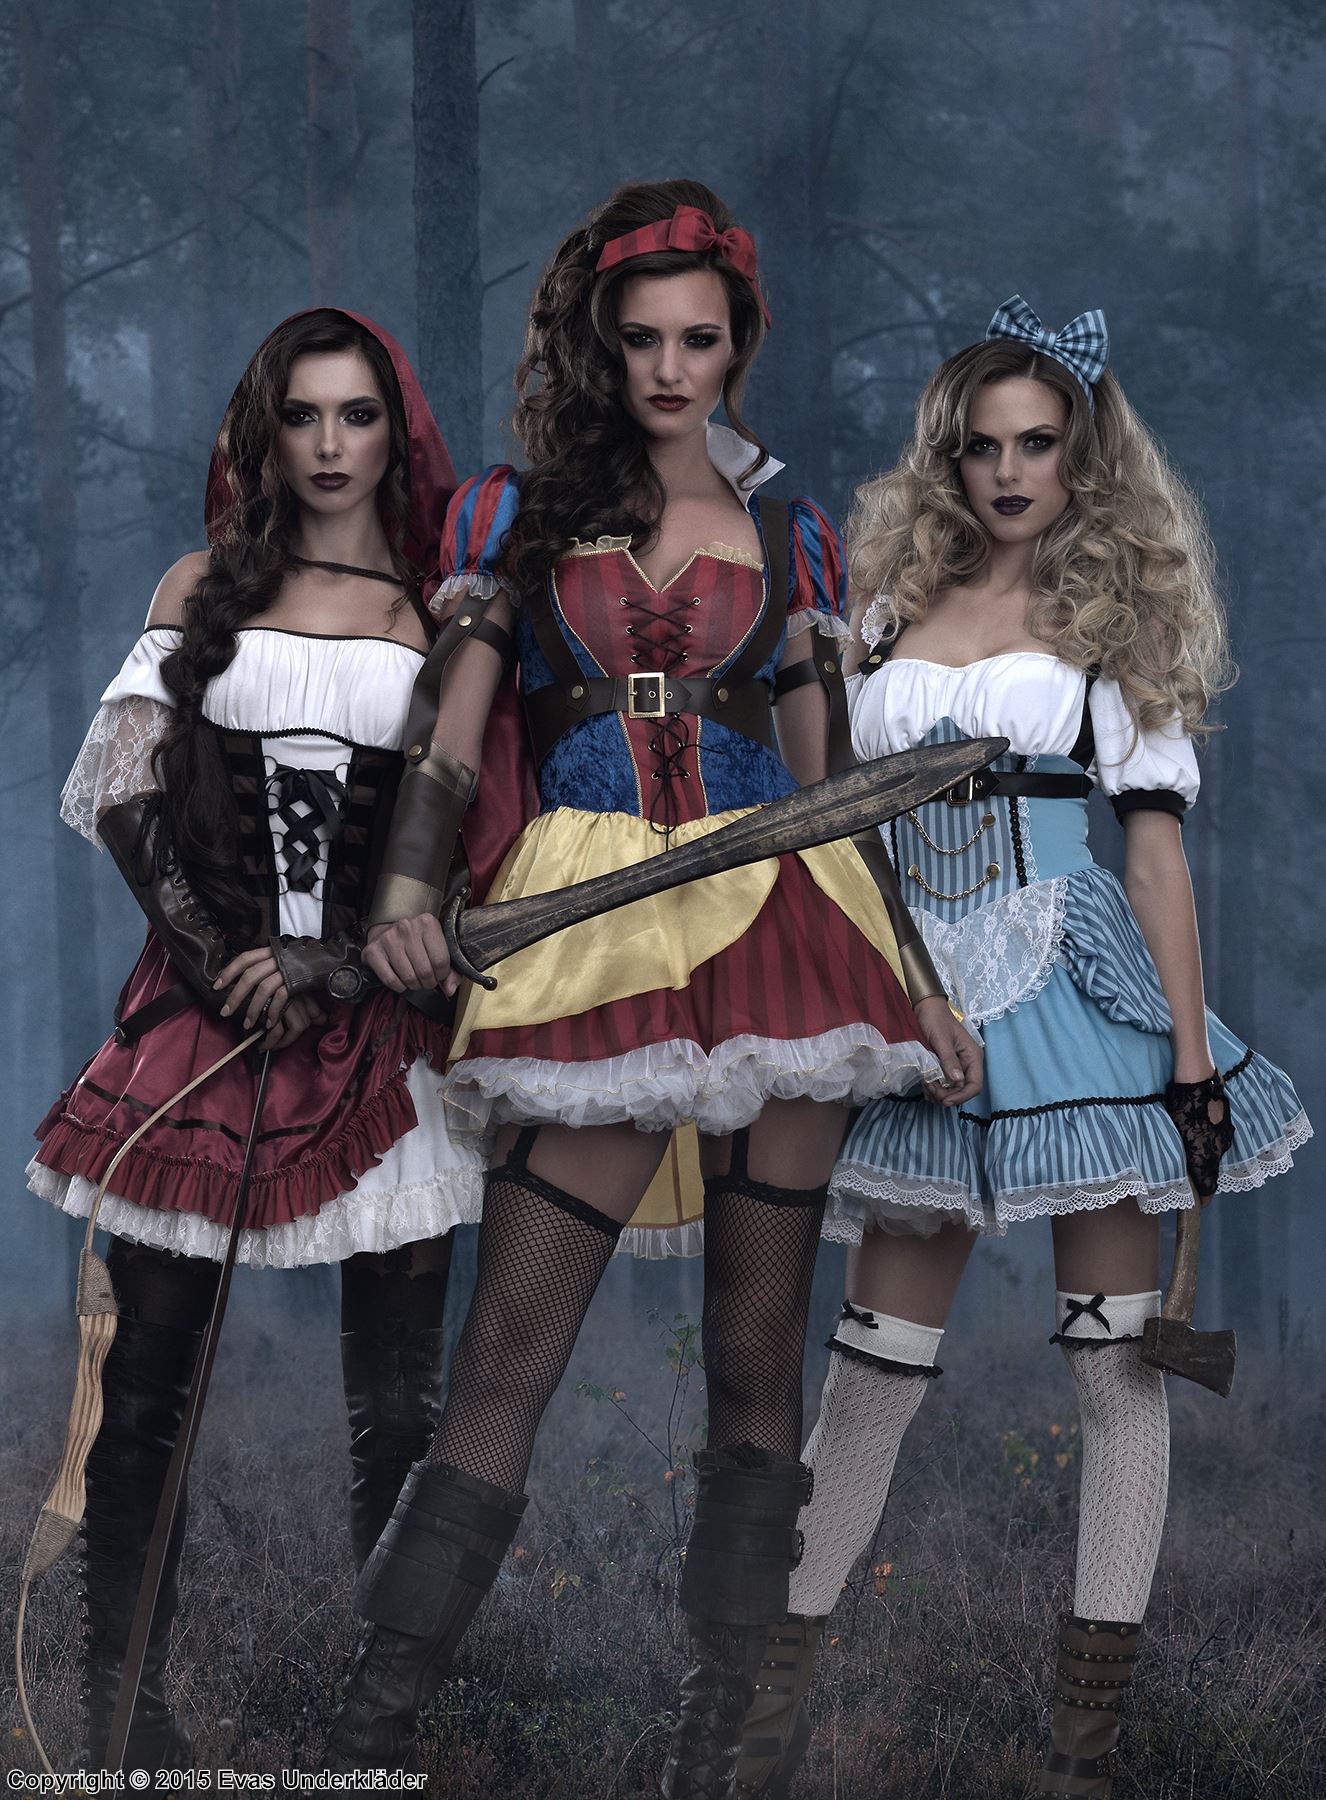 Alice in Wonderland, costume dress, lace trim, belt, apron, stripes